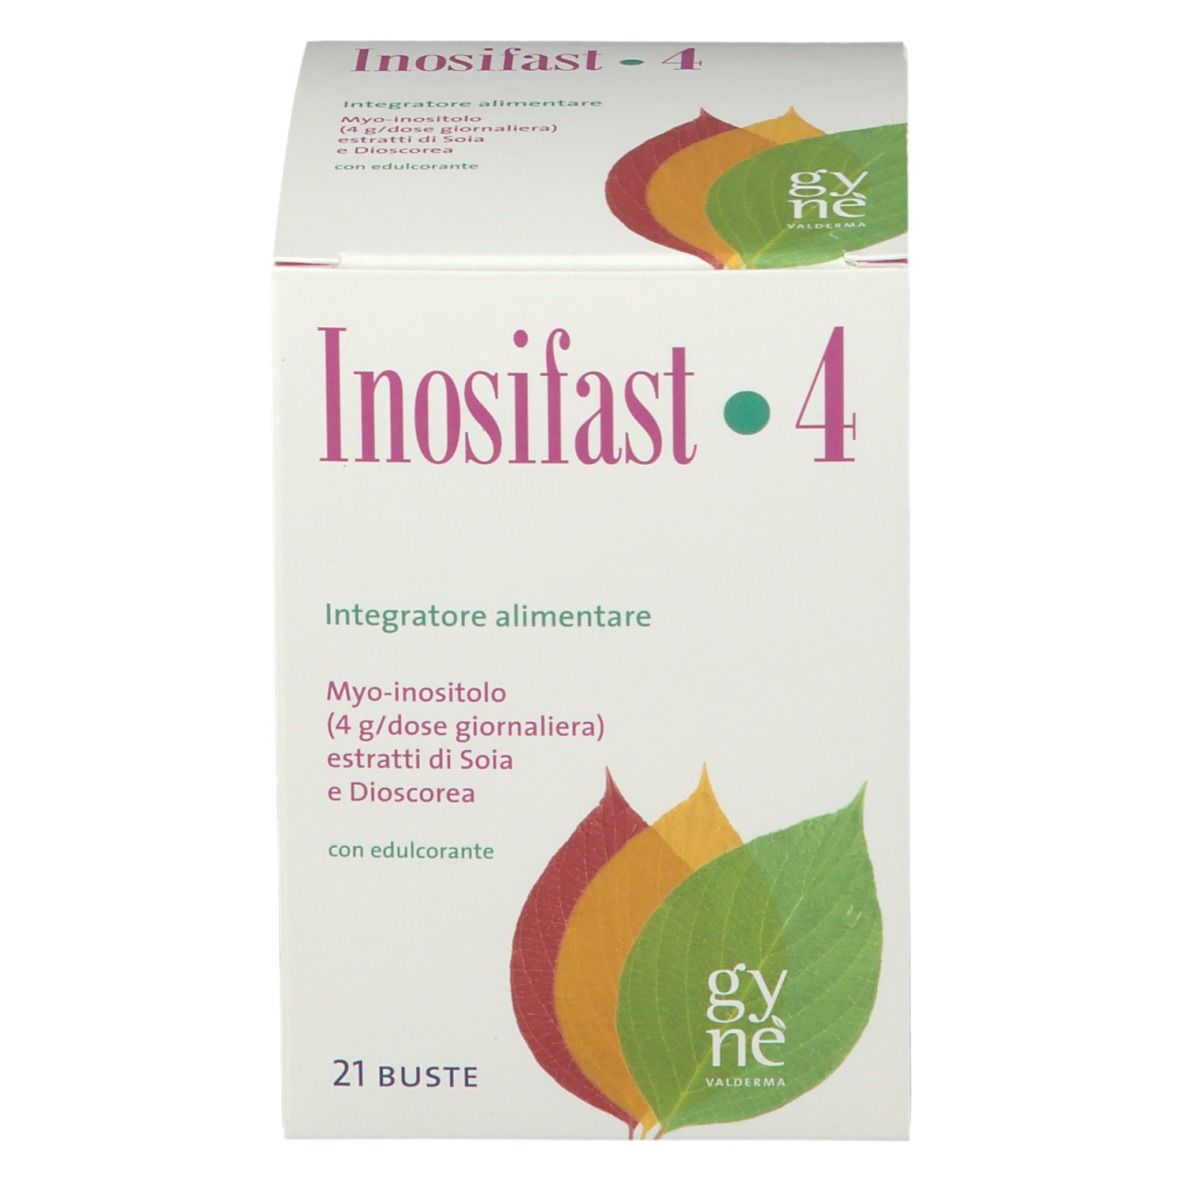 Inosifast 4